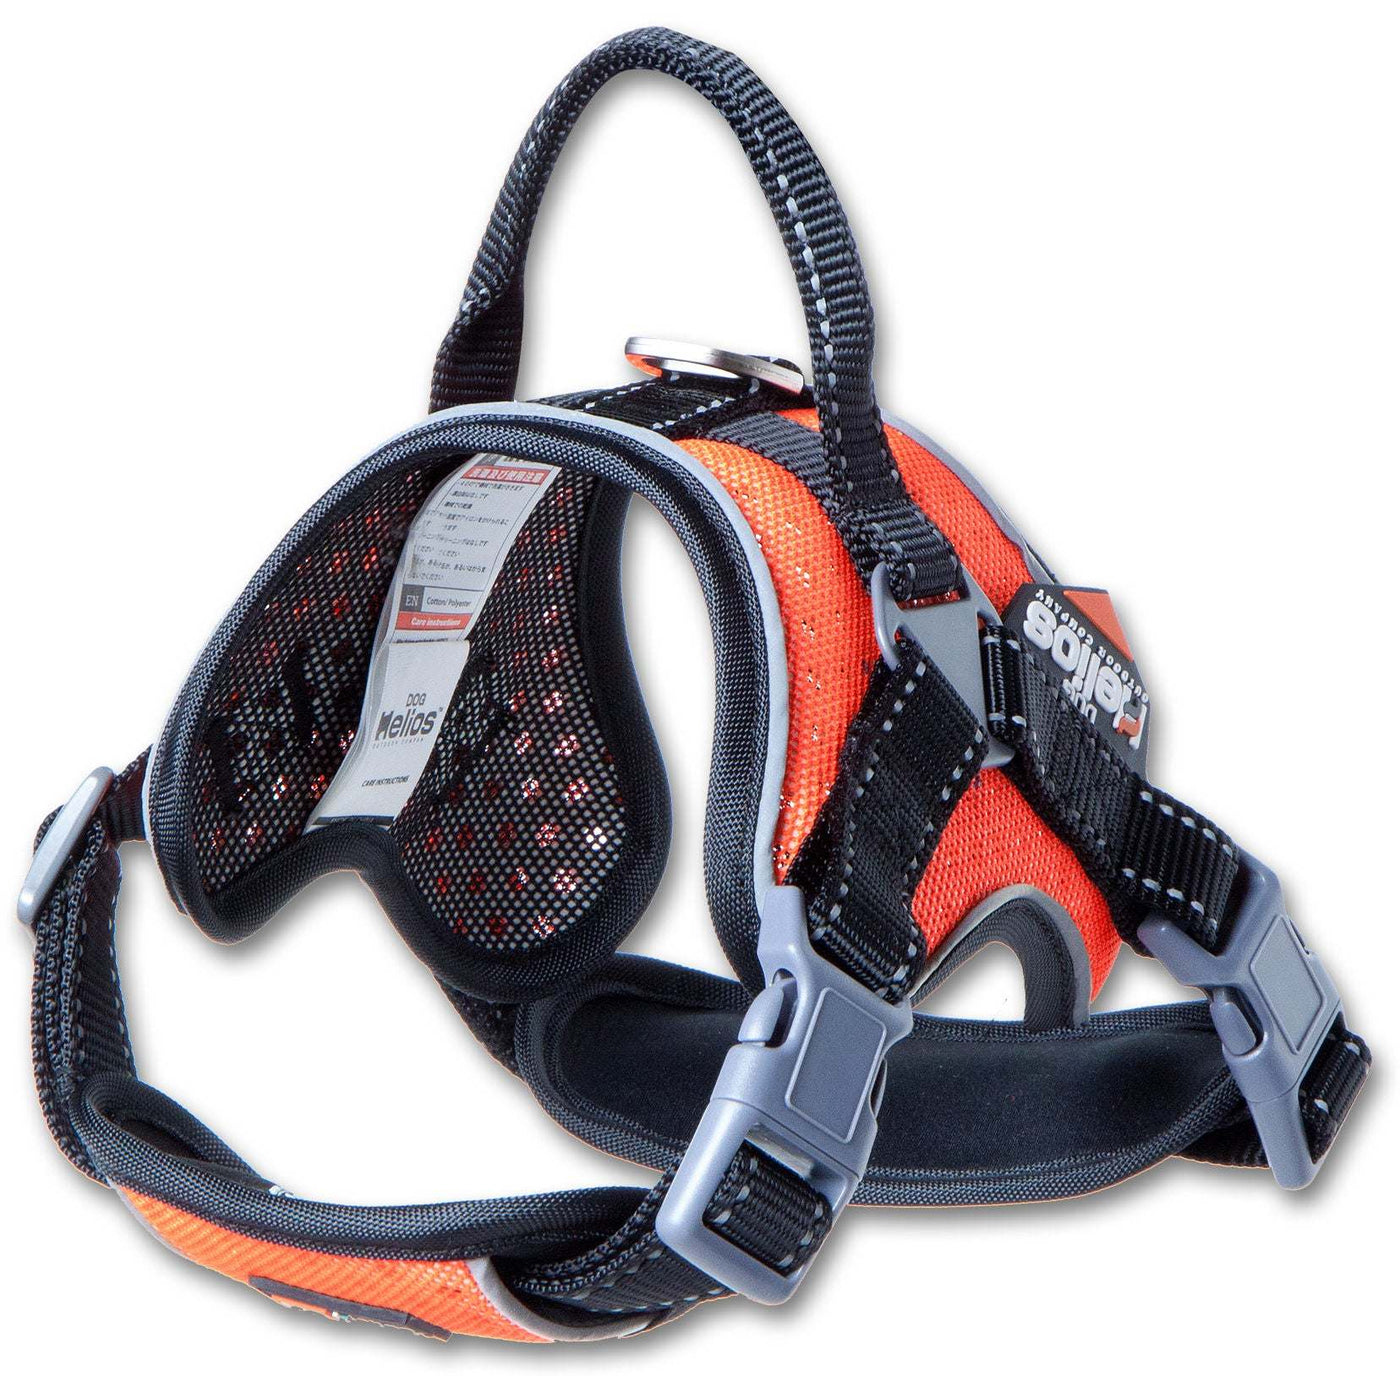 Dog Helios ® 'Scorpion' Sporty High-Performance Free-Range Dog Harness